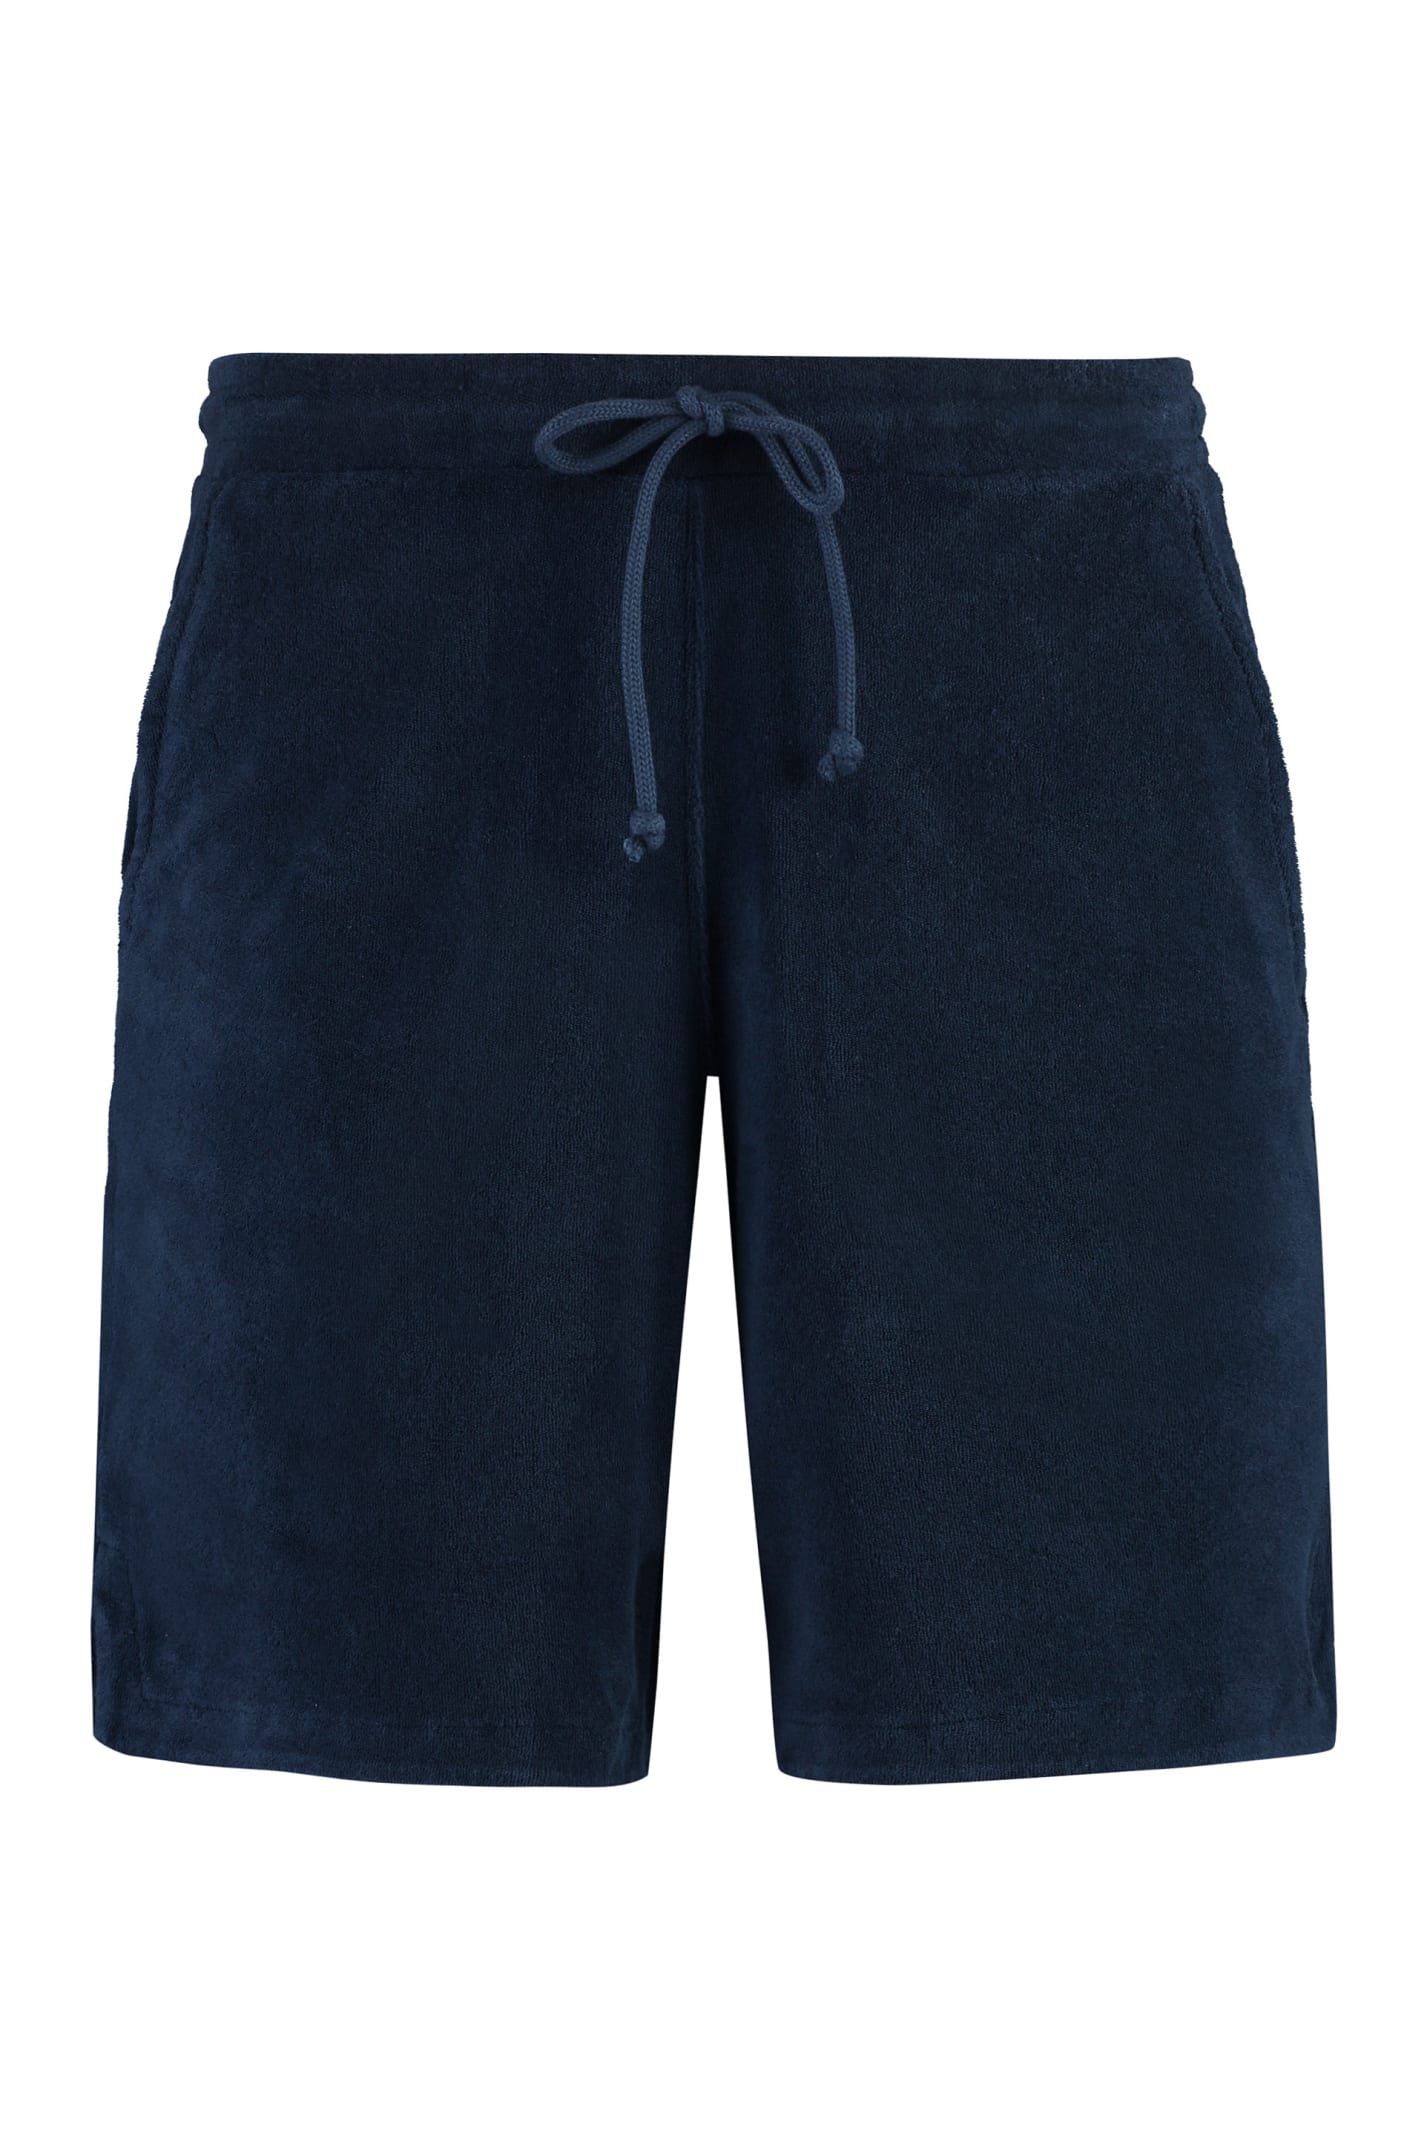 Bundy Cotton Bermuda Shorts